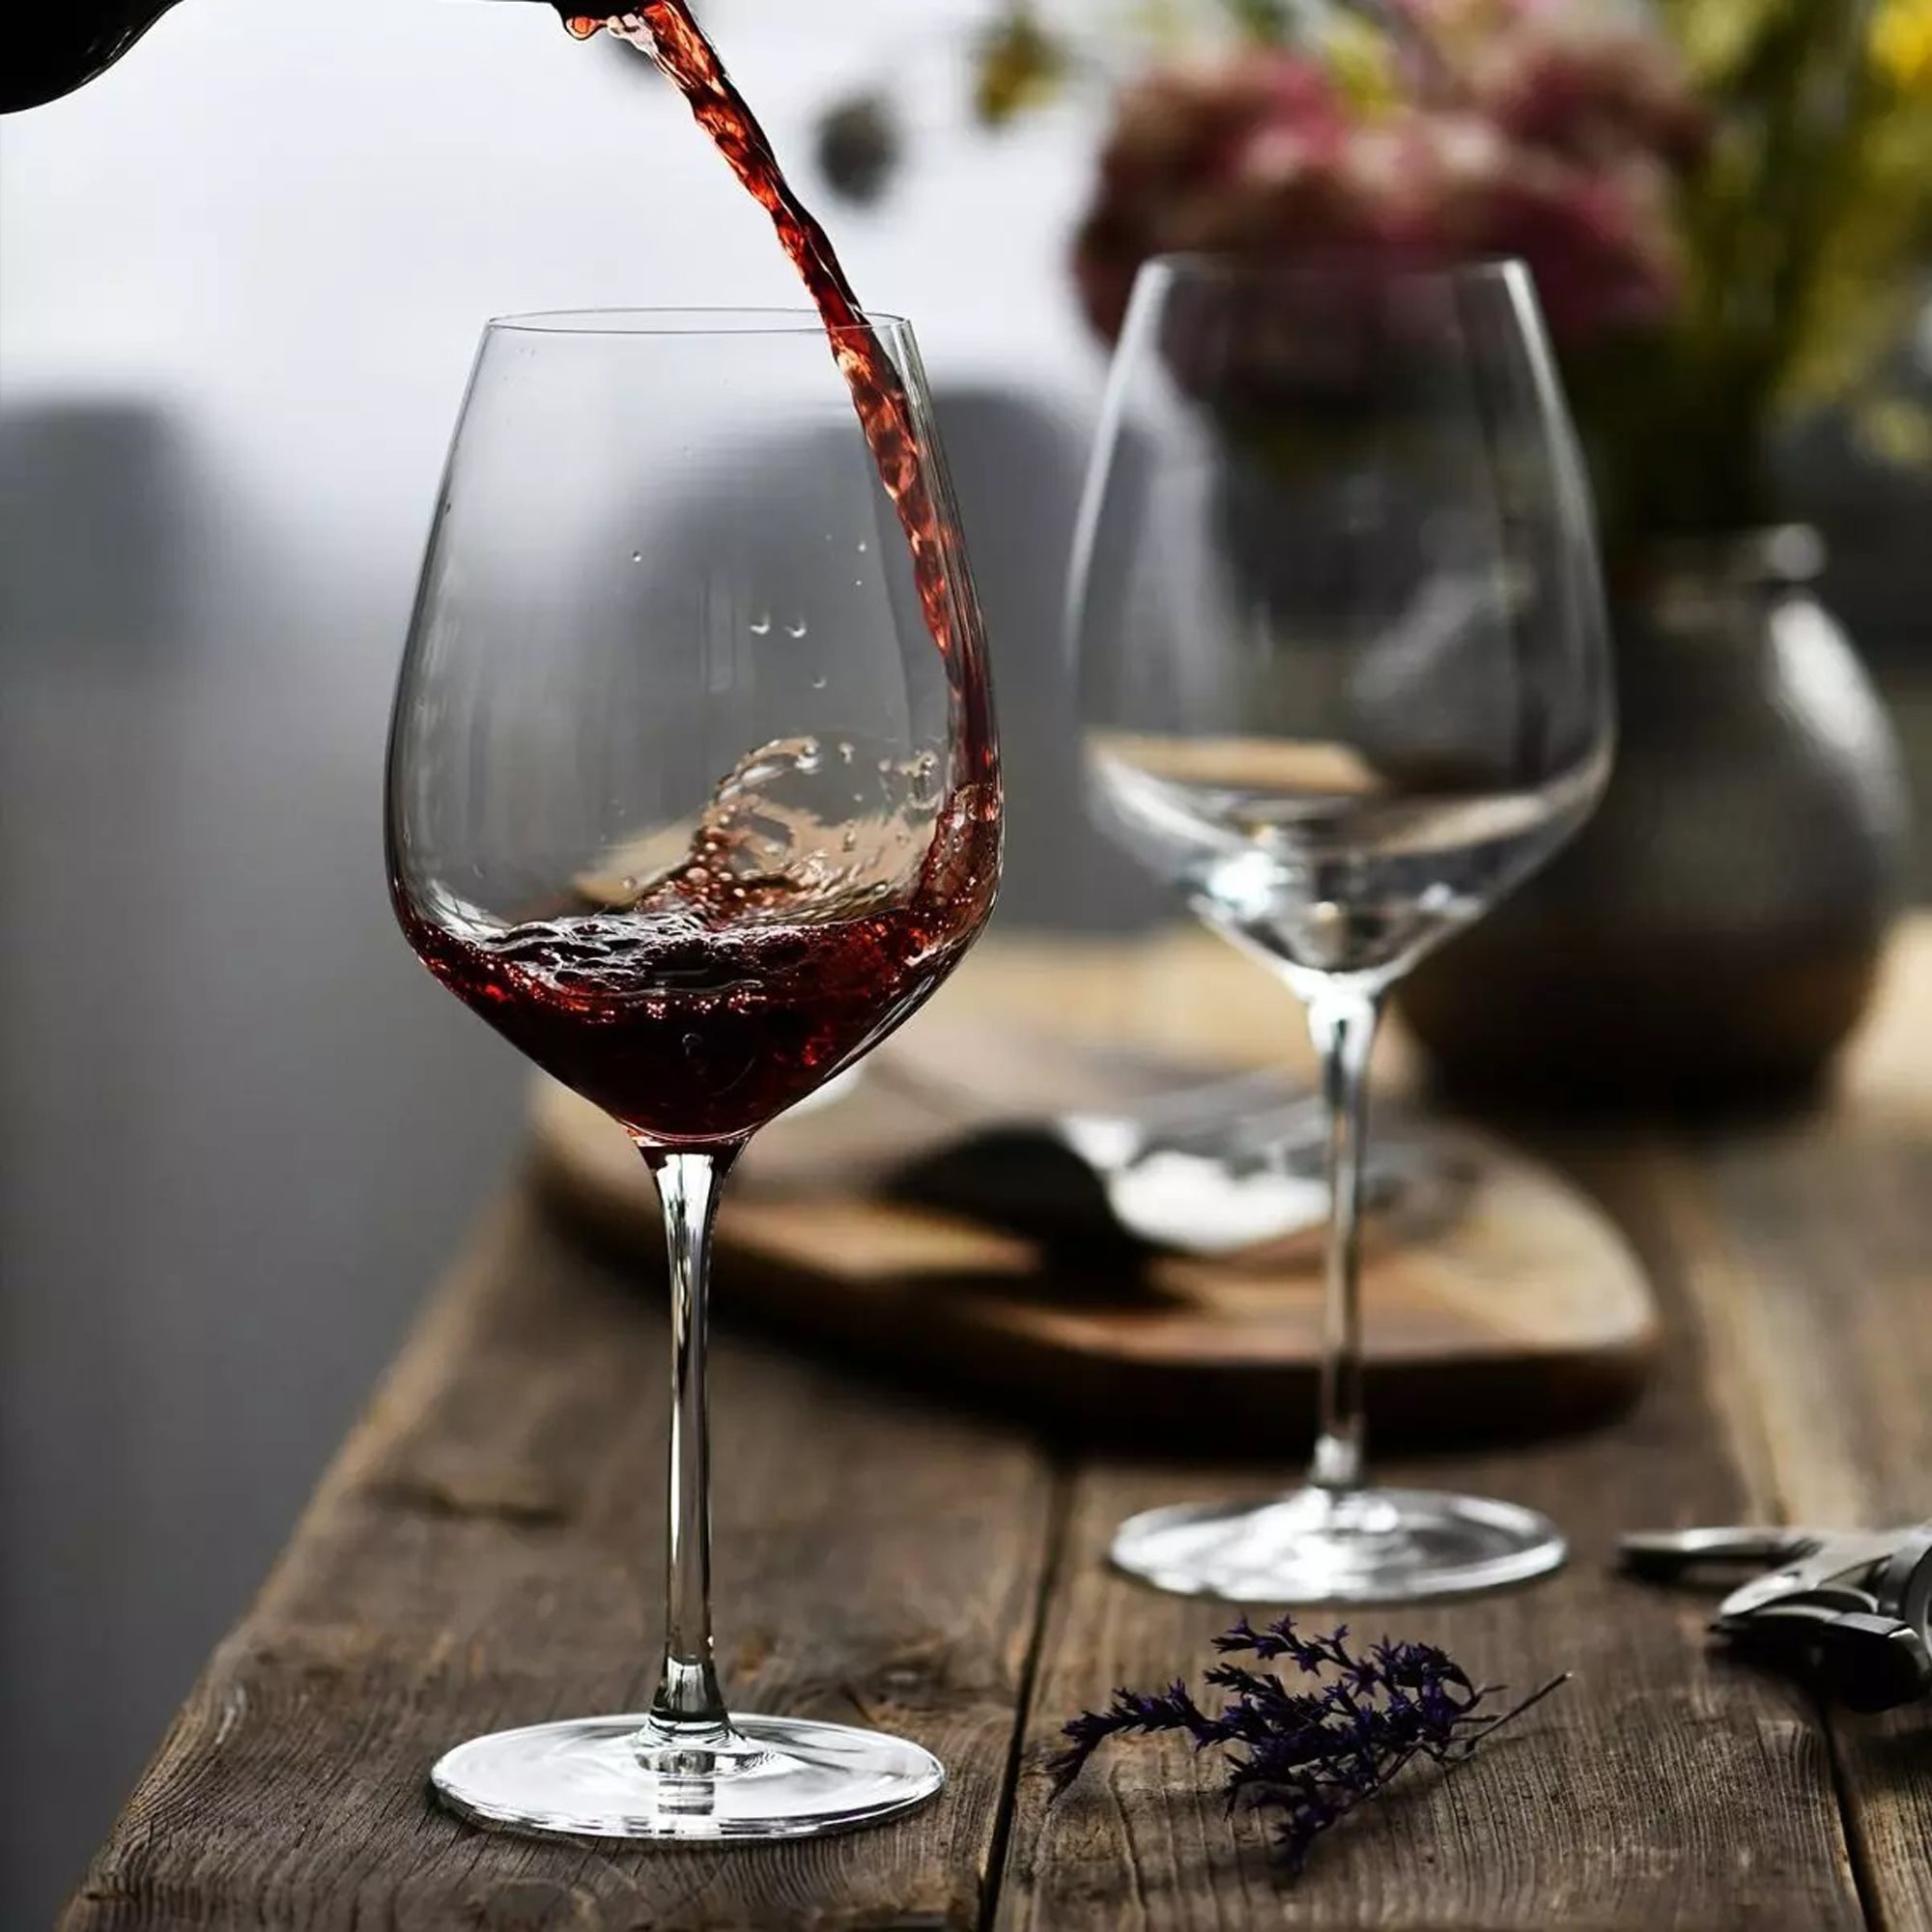 Set of 2 Pinot Noir wine glasses, made of crystalline glass, 700ml